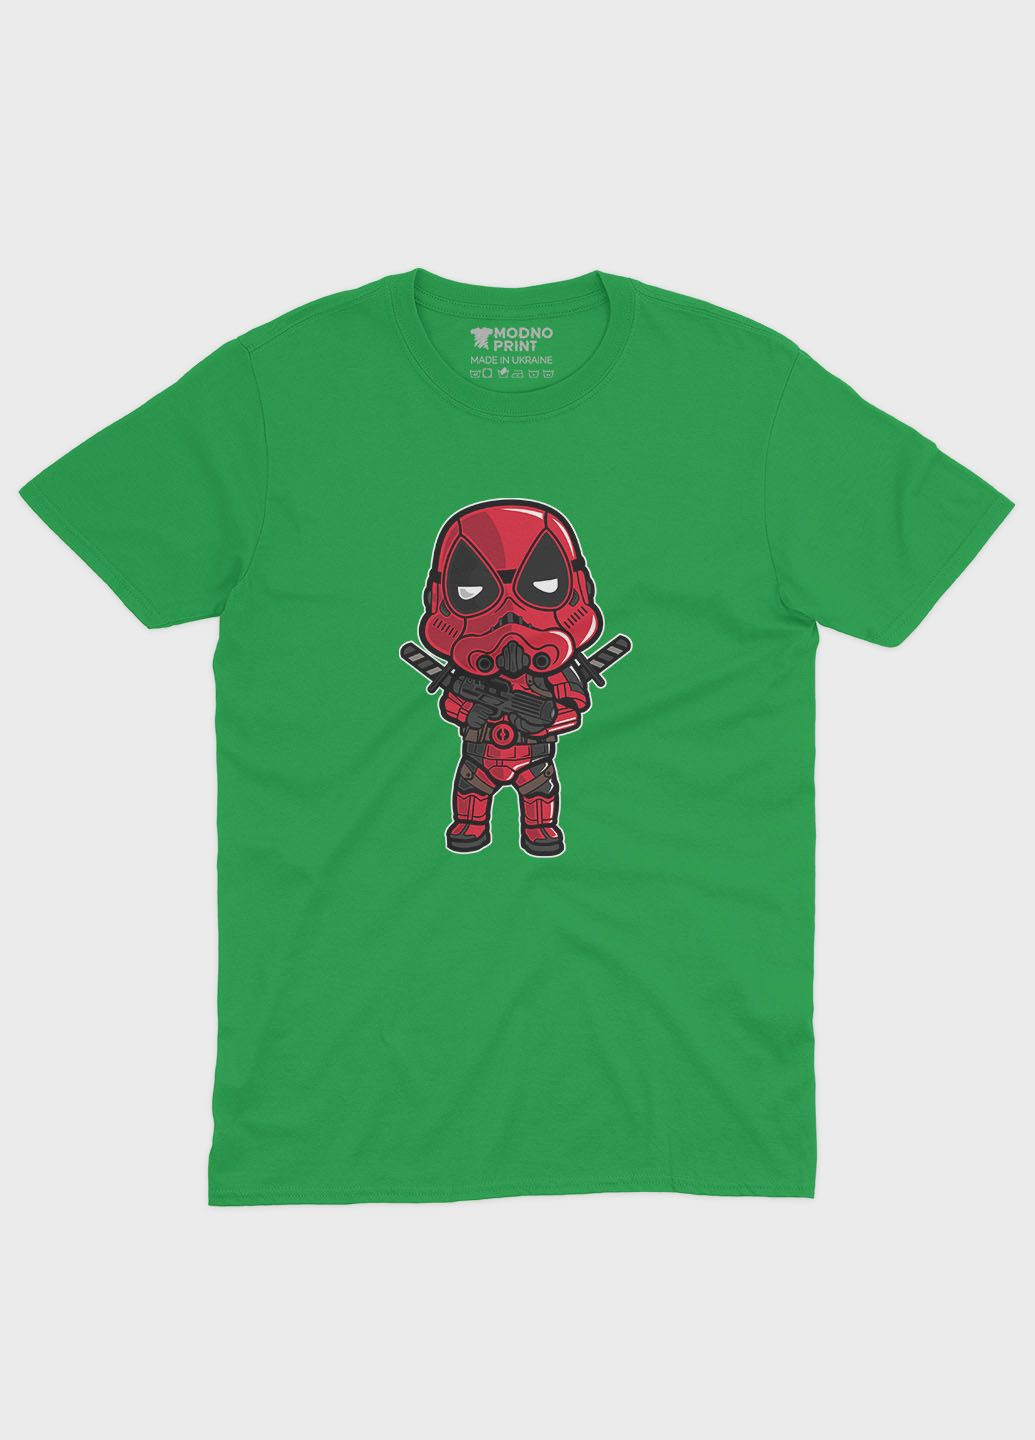 Зеленая демисезонная футболка для мальчика с принтом антигероя - дедпул (ts001-1-keg-006-015-017-b) Modno